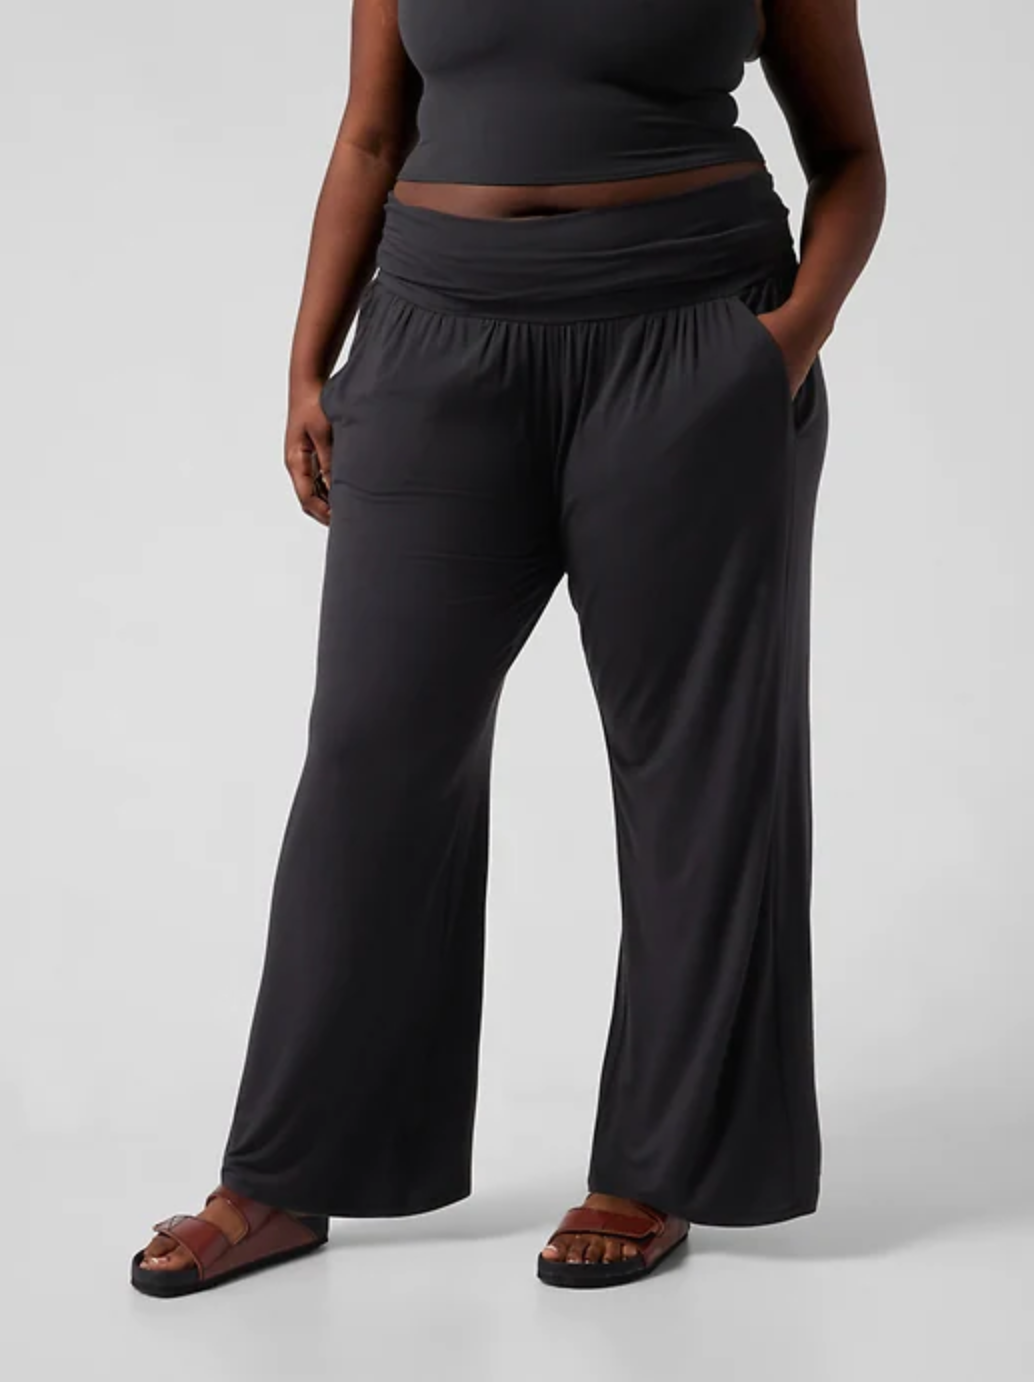 Athleta Studio Wide Leg Yoga Pant. Size S-M Black - $22 (75% Off Retail) -  From Kate